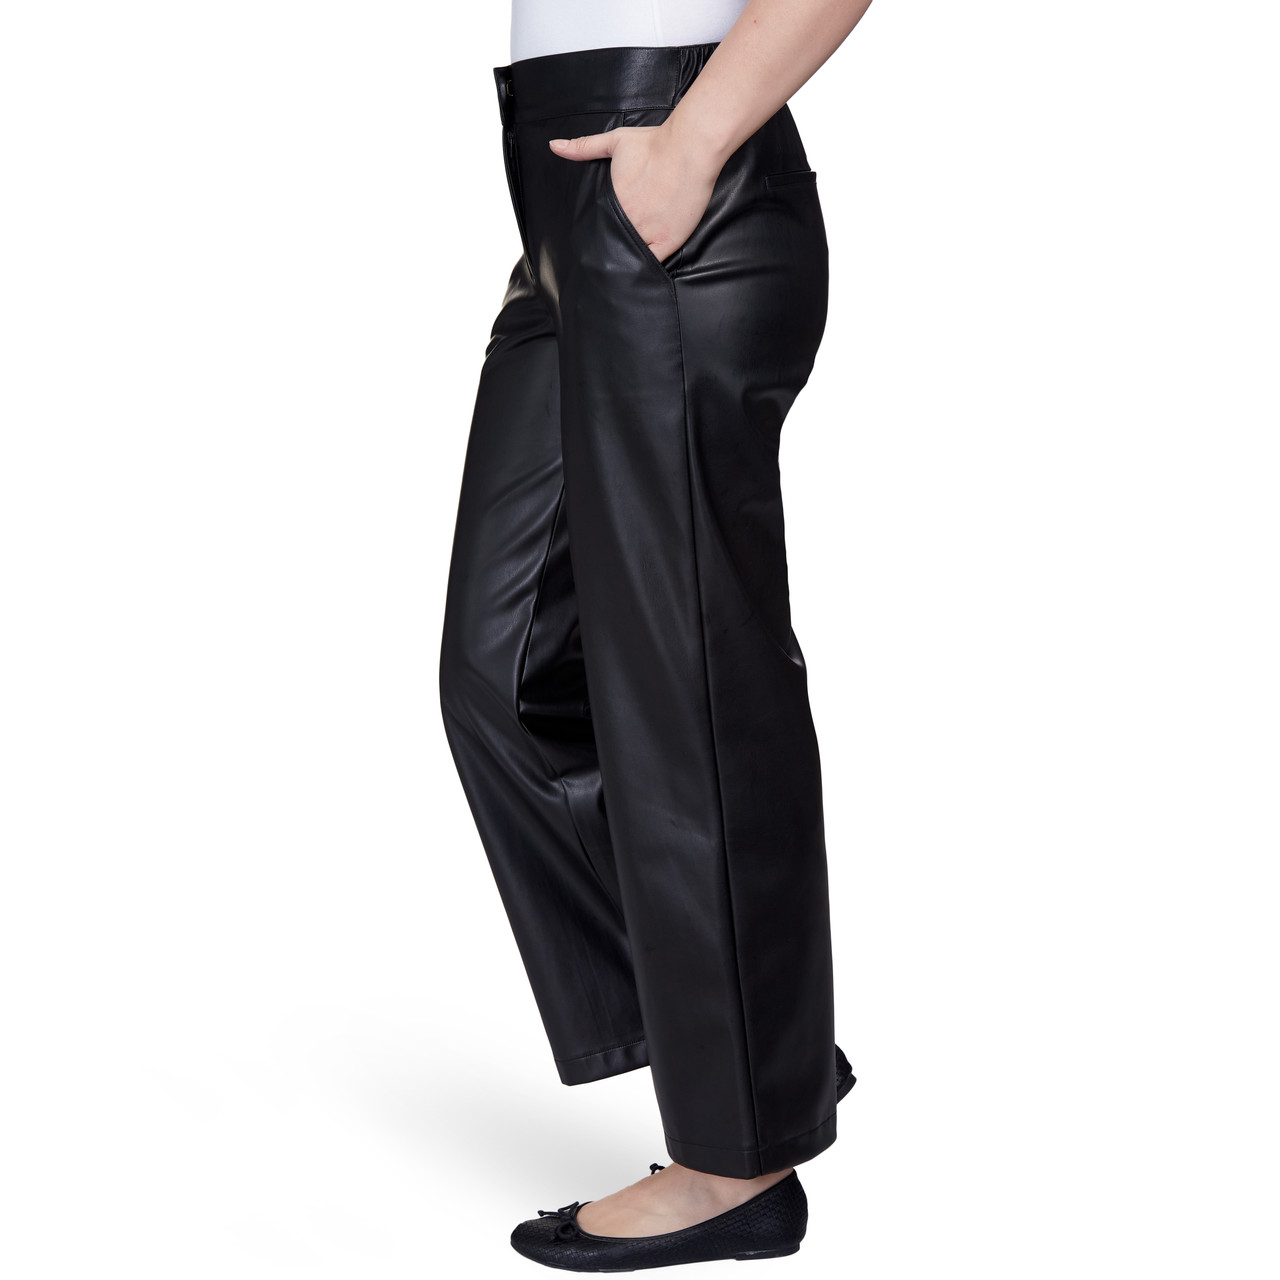 Wide-leg Leather Pants - Black - Ladies